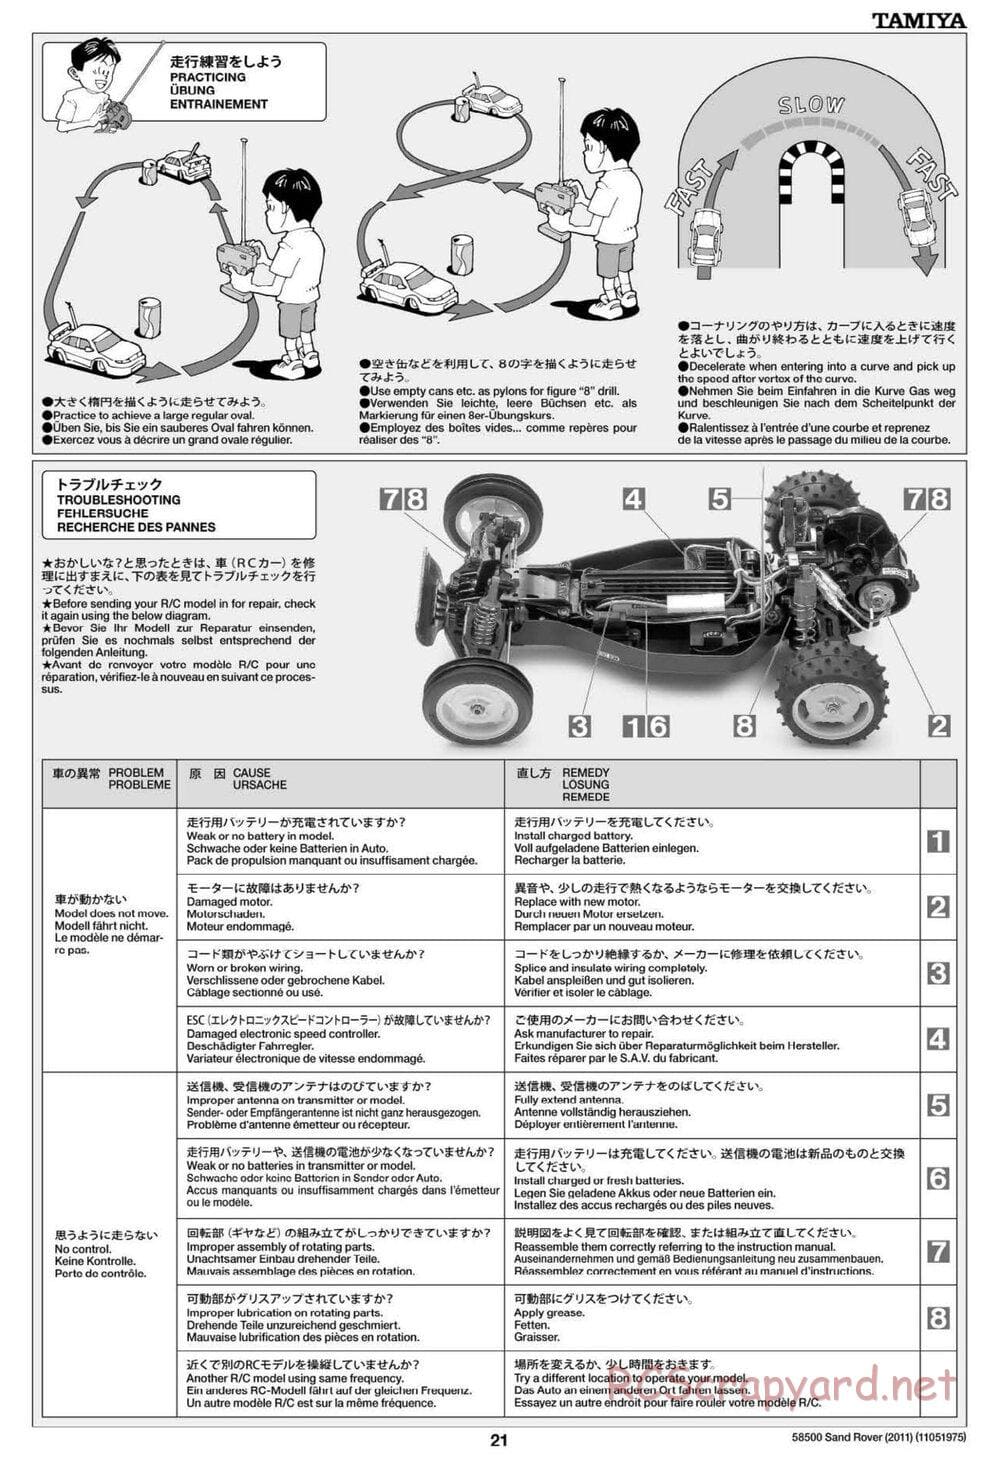 Tamiya - Sand Rover 2011 Chassis - Manual - Page 21